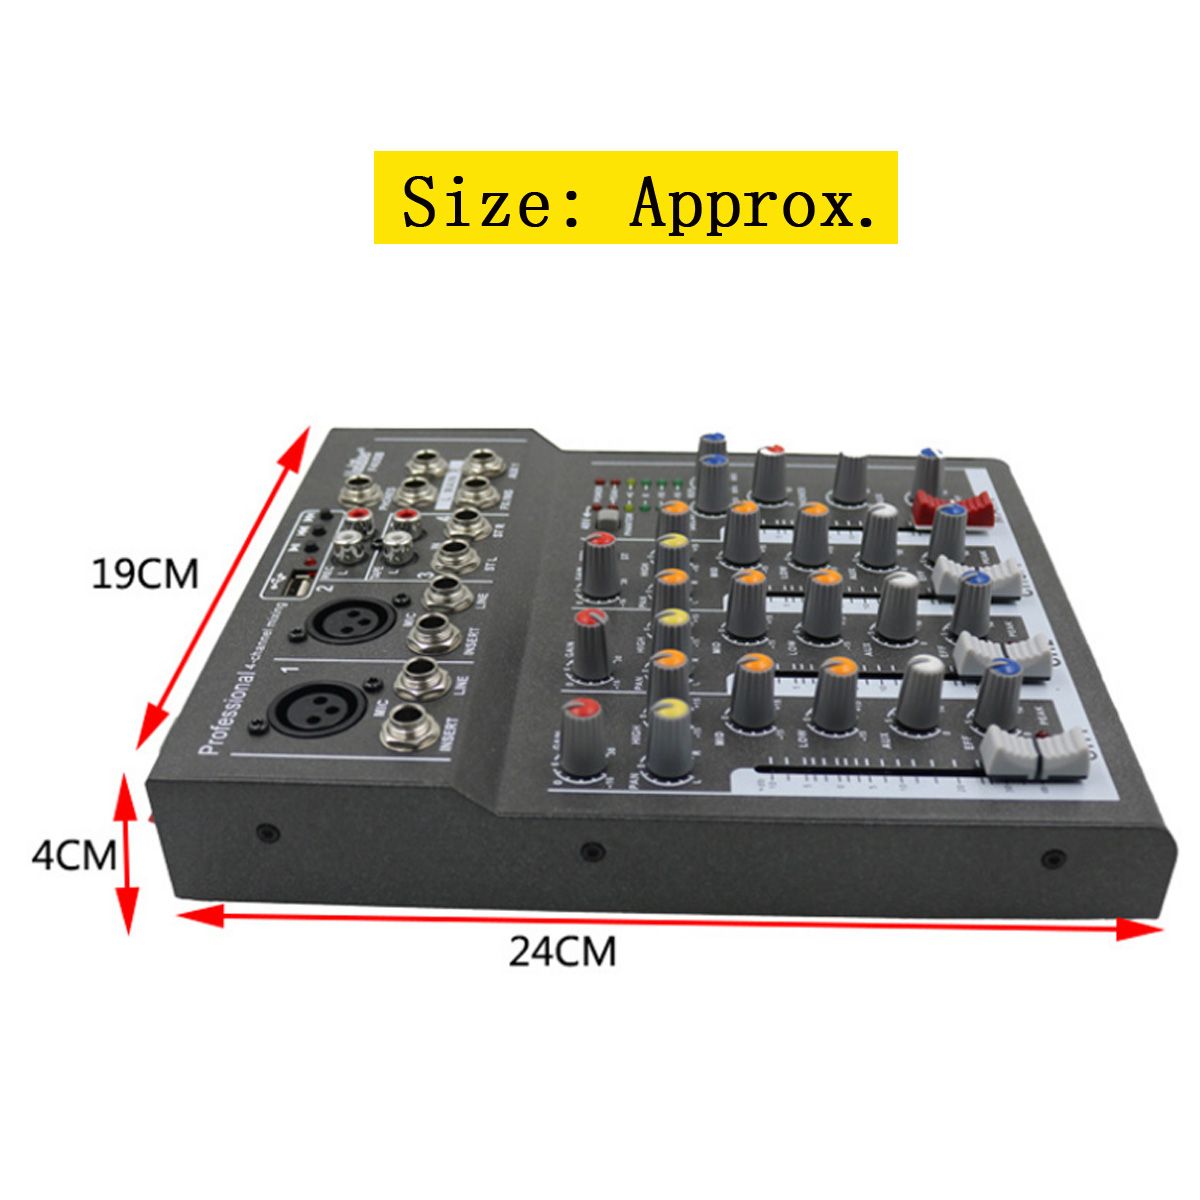 48V-Professional-4-Channel-Live-Studio-Audio-Sound-USB-Mixer-Mixing-Console-1159728